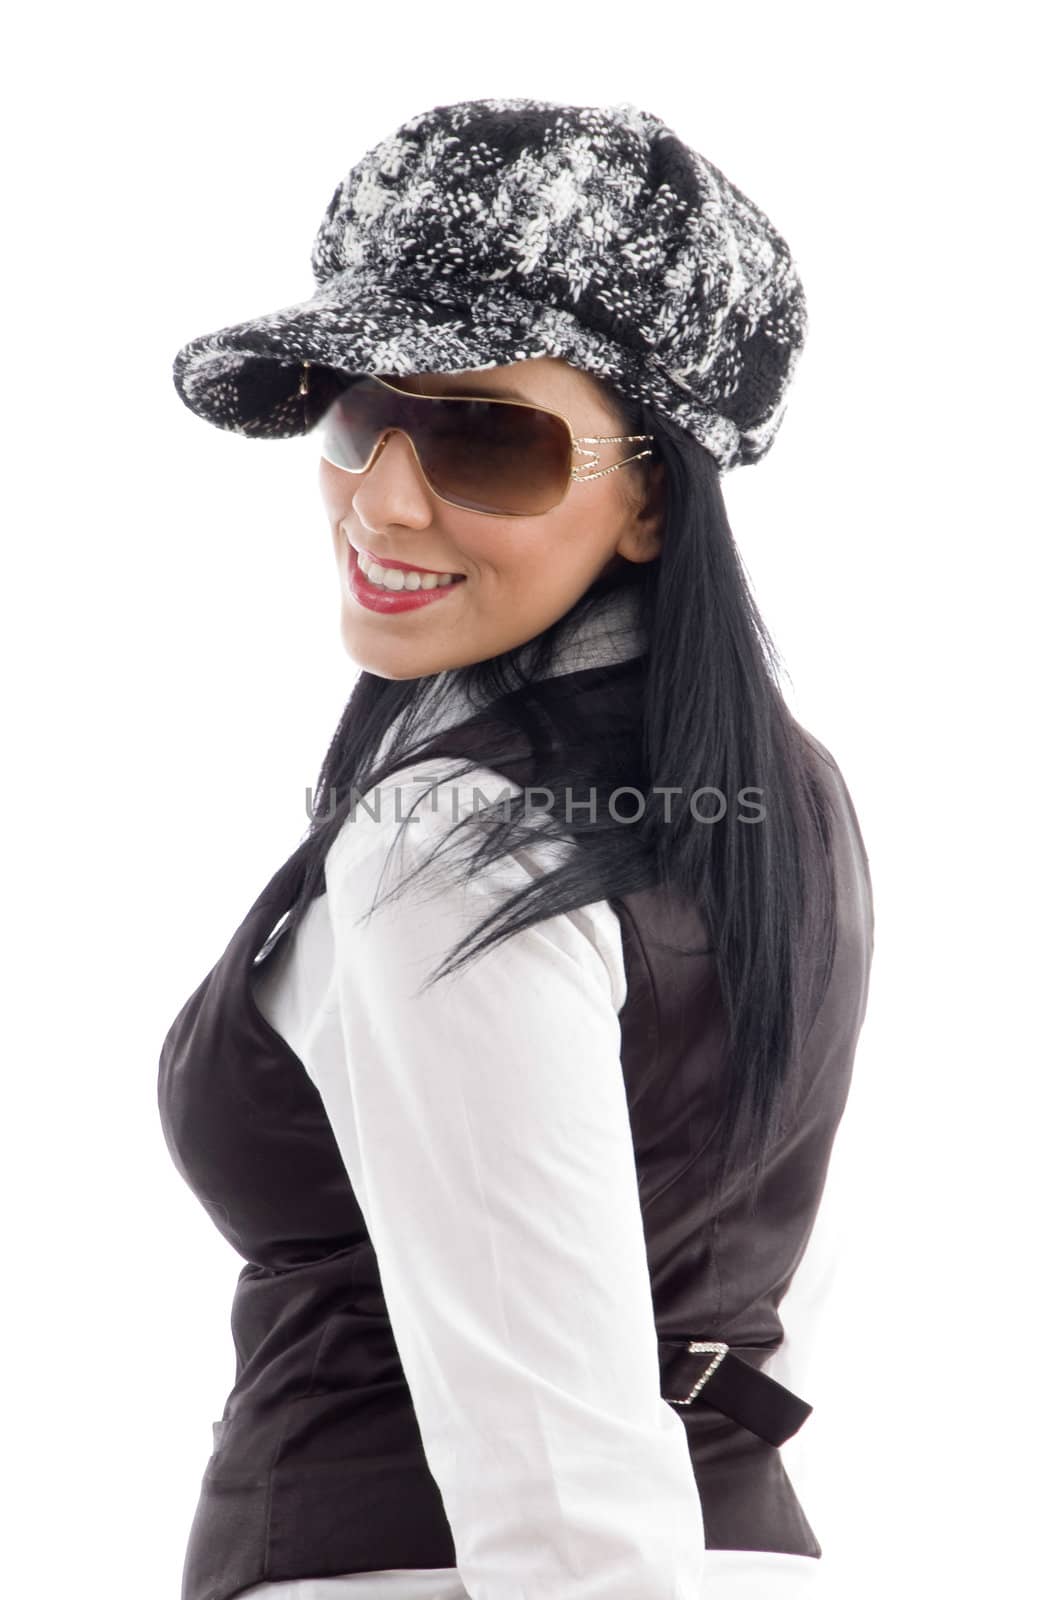 young female wearing sunglasses posing backwards by imagerymajestic